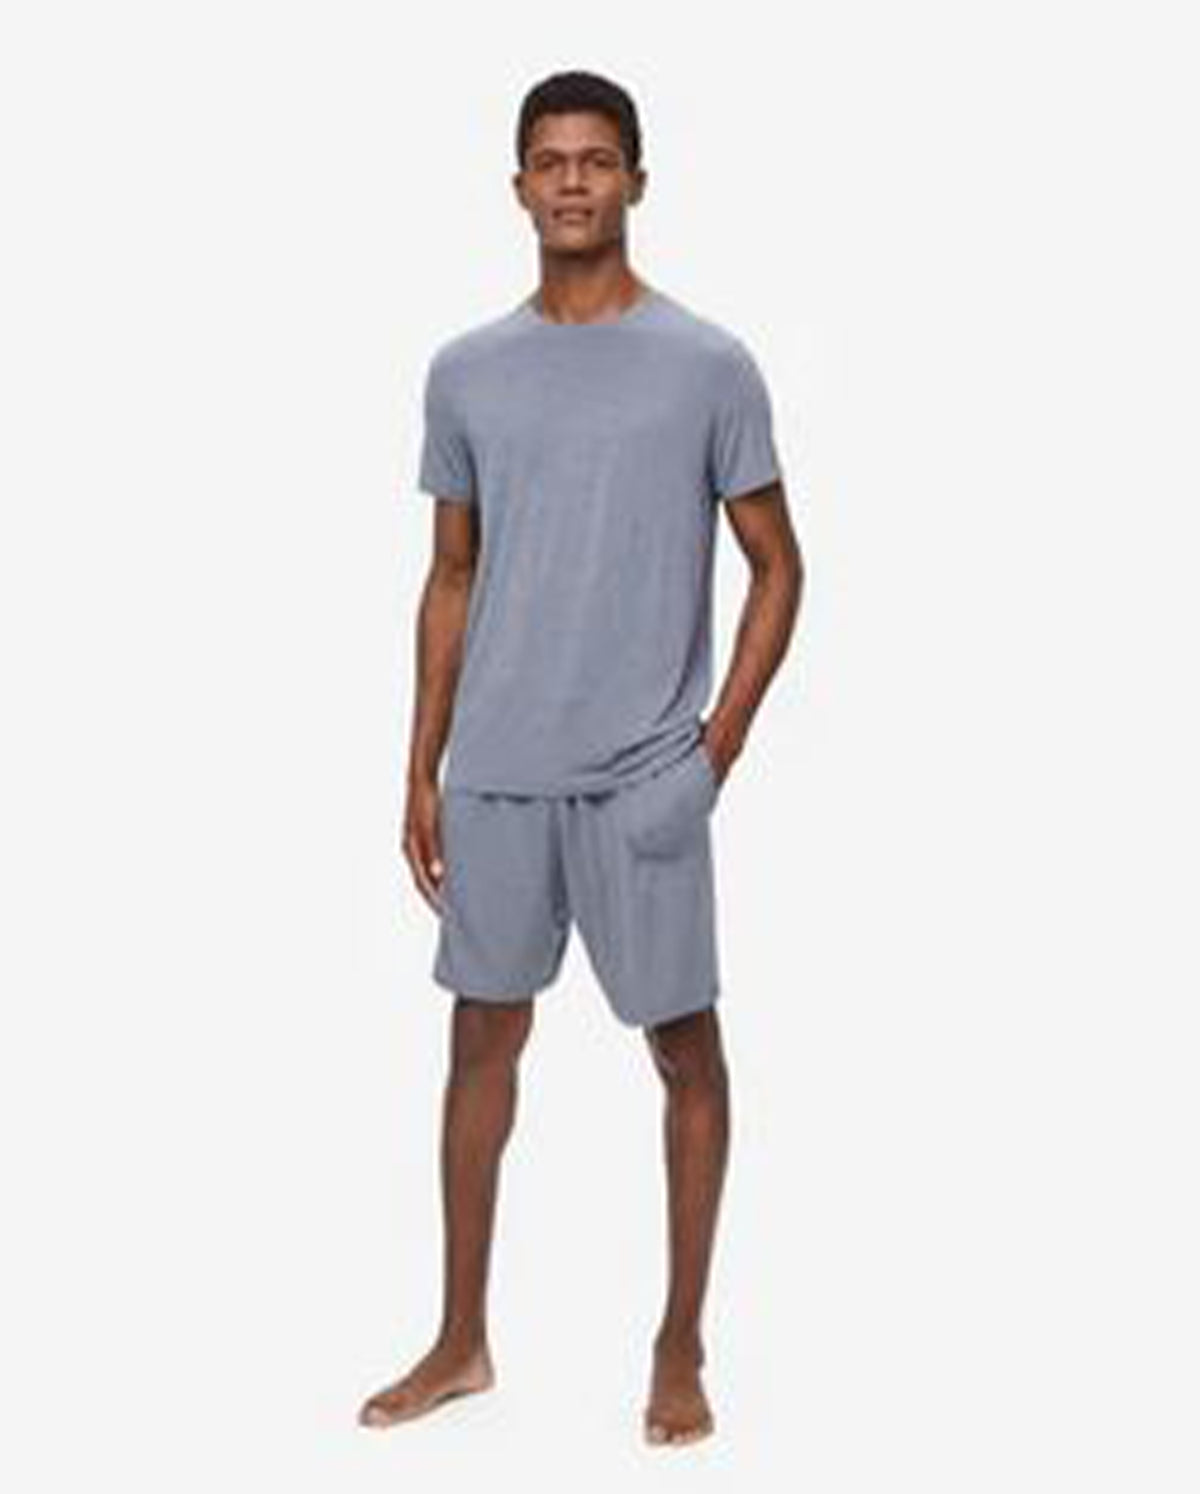 Marlowe Micro Modal Shorts - Charcoal